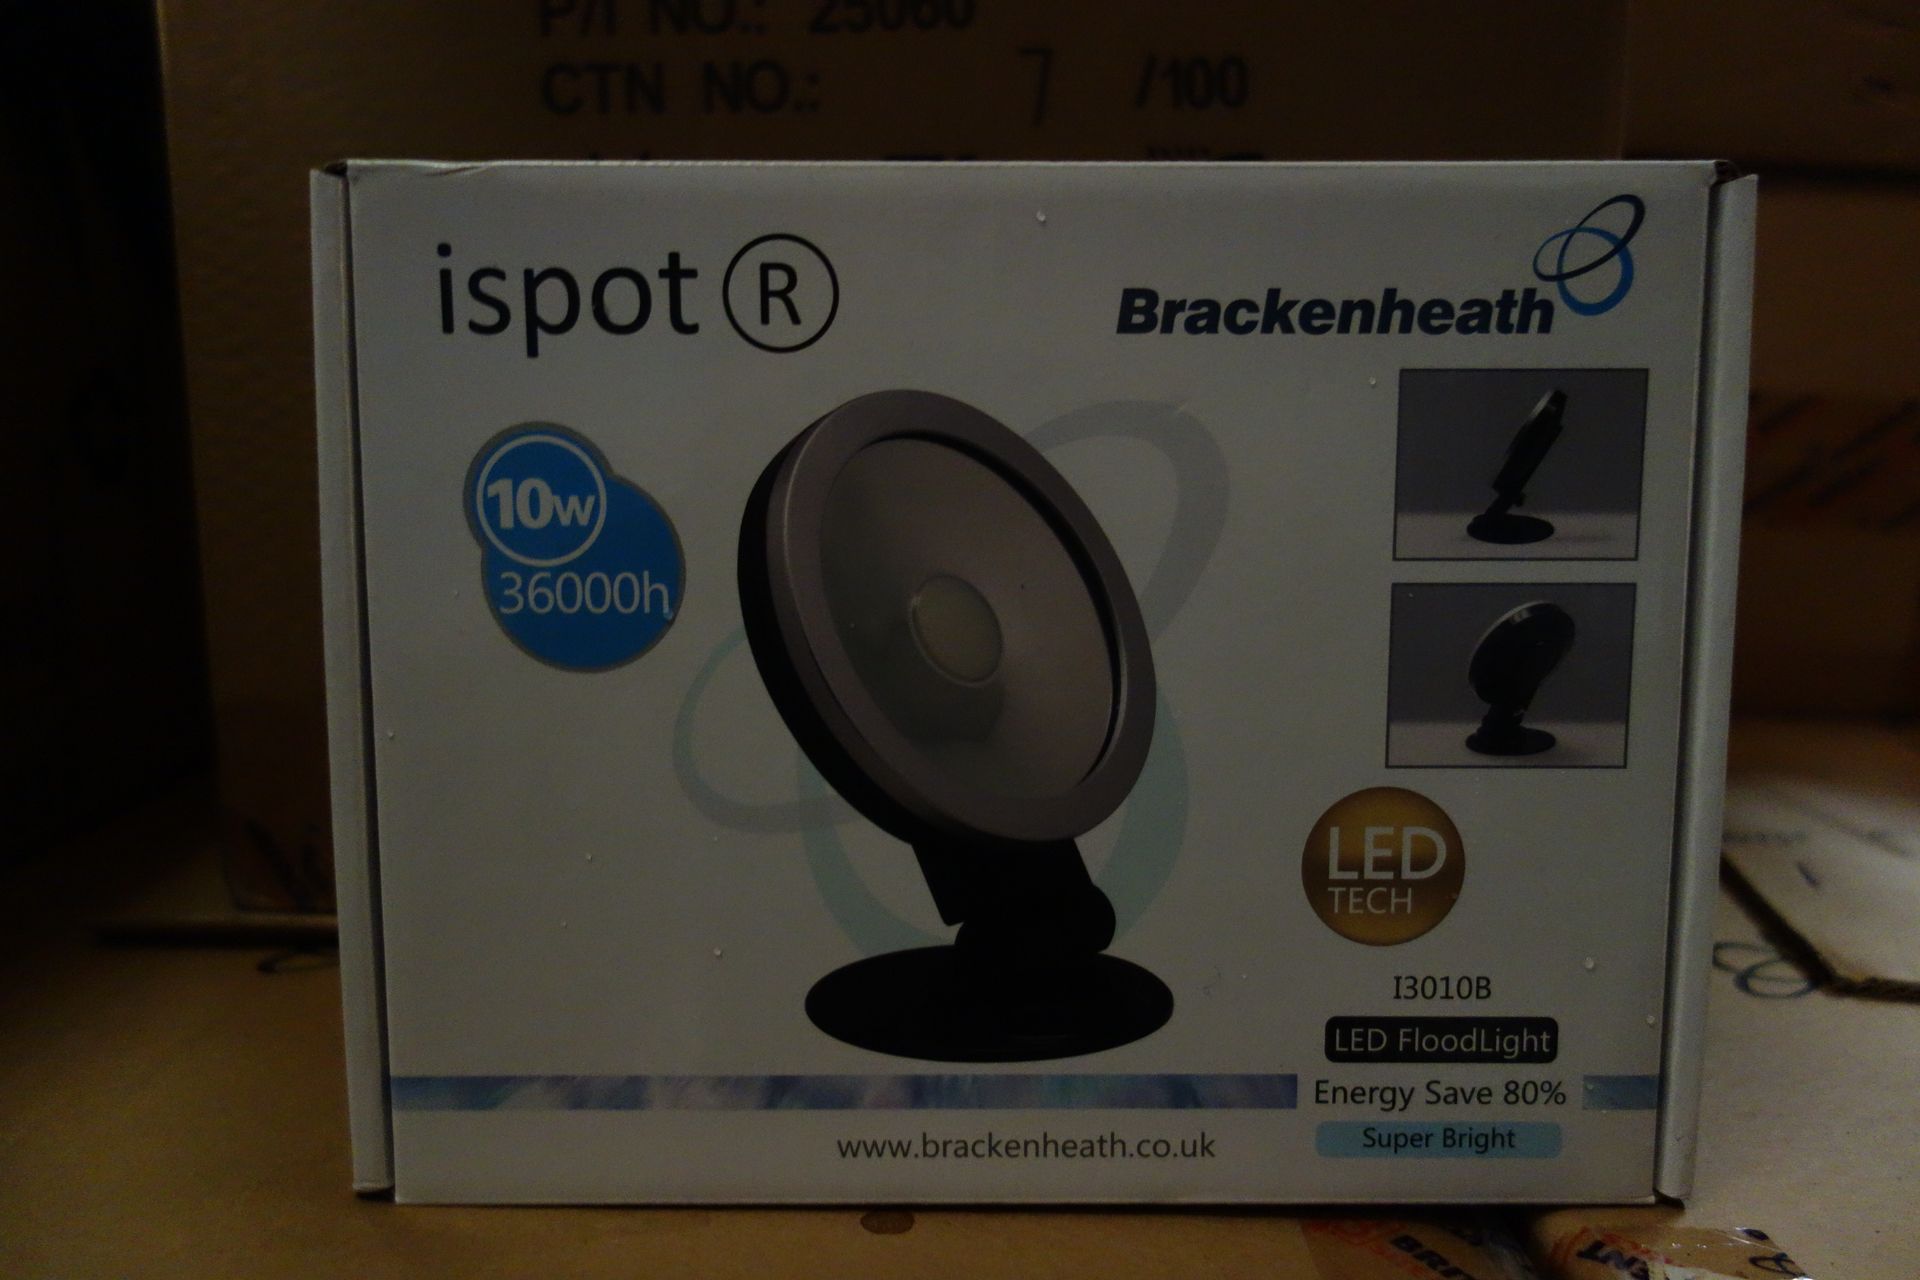 10 X Brakenheath Ispot 13010B 10W LED Flood Light